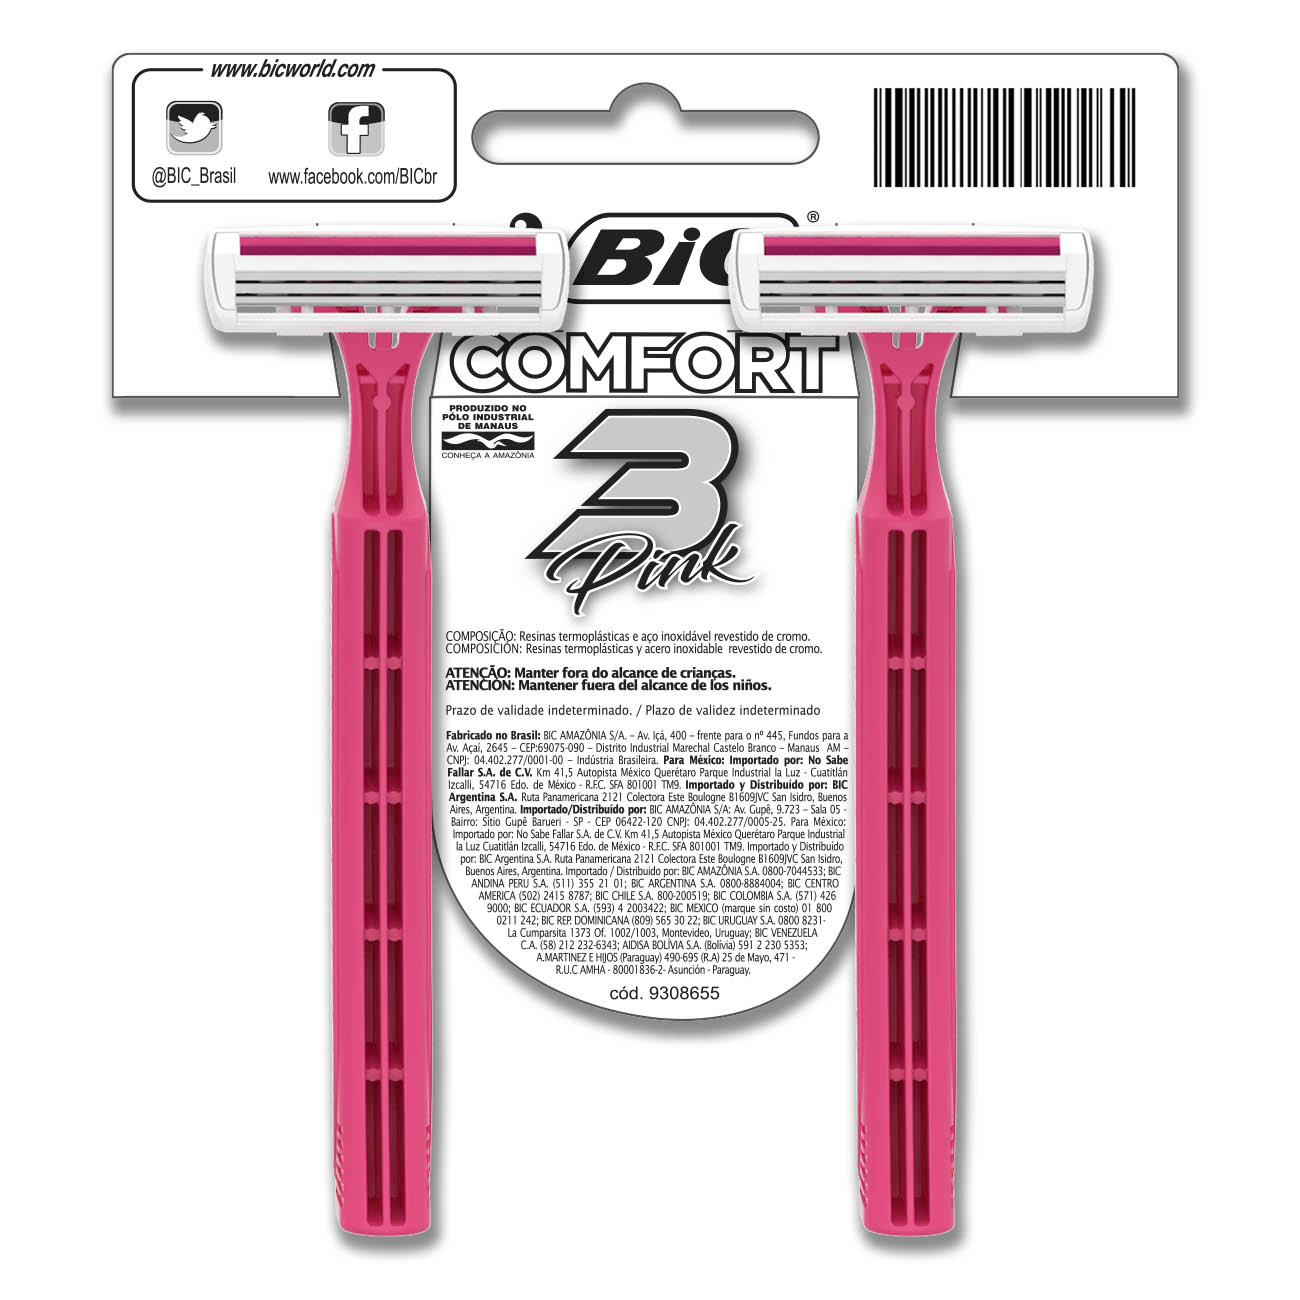 Aparelho de Depilar BIC Comfort 3 Pink 12 embalagens c/ 2 unidades